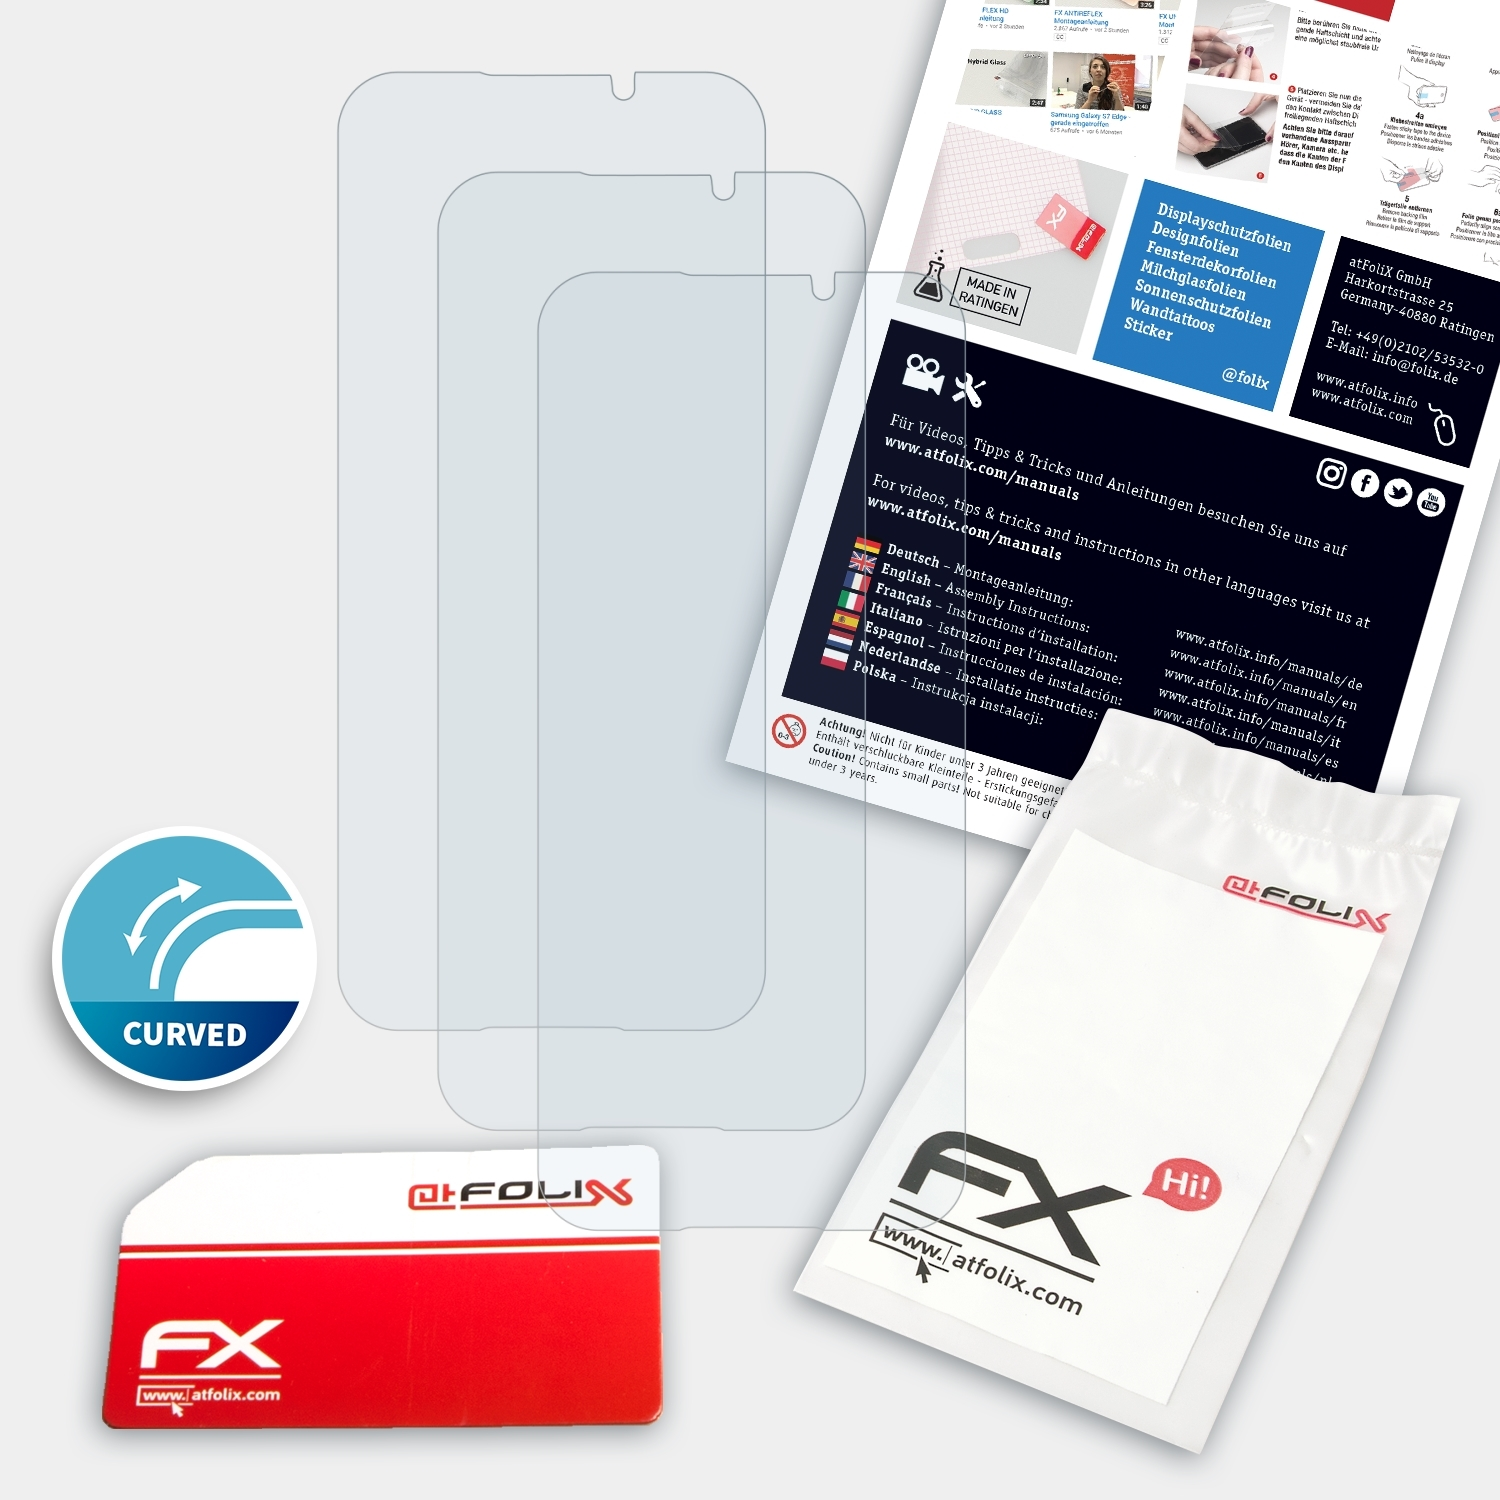 ATFOLIX 3x 2) Displayschutz(für Xiaomi Shark FX-ActiFleX Black